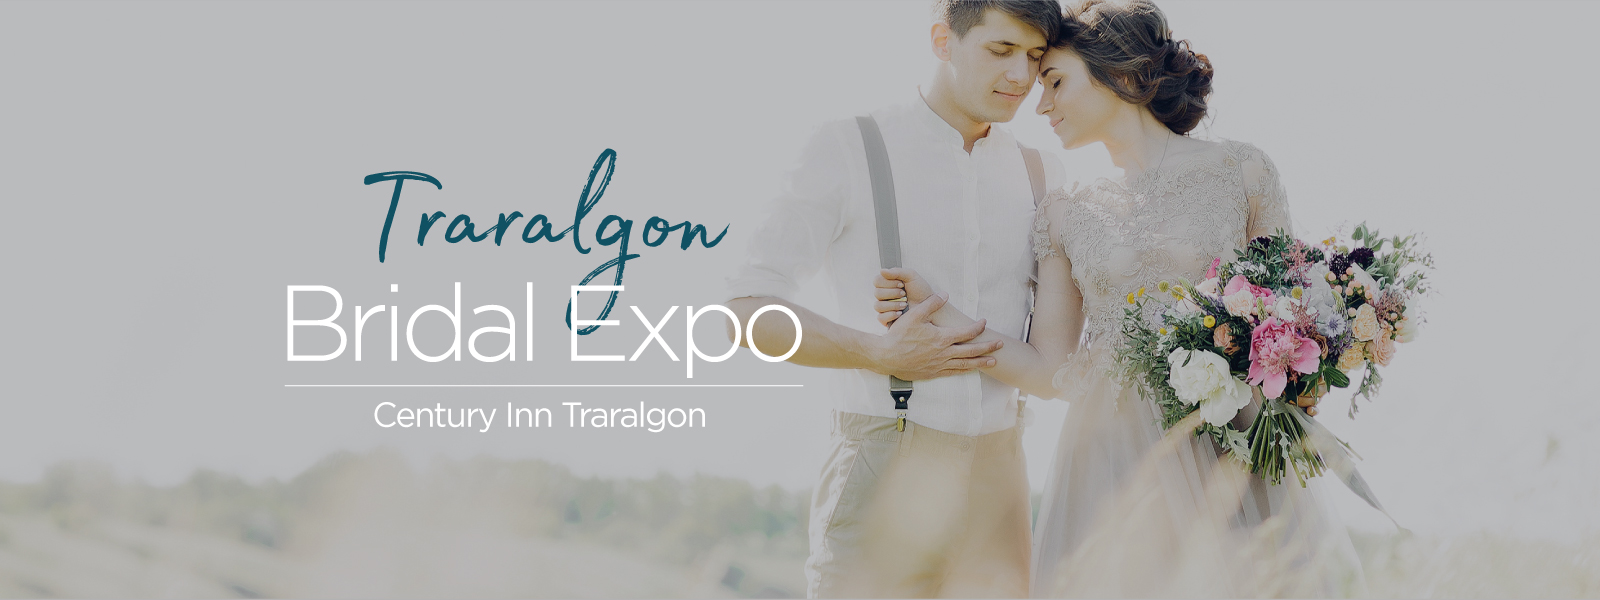 Traralgon Bridal Expo